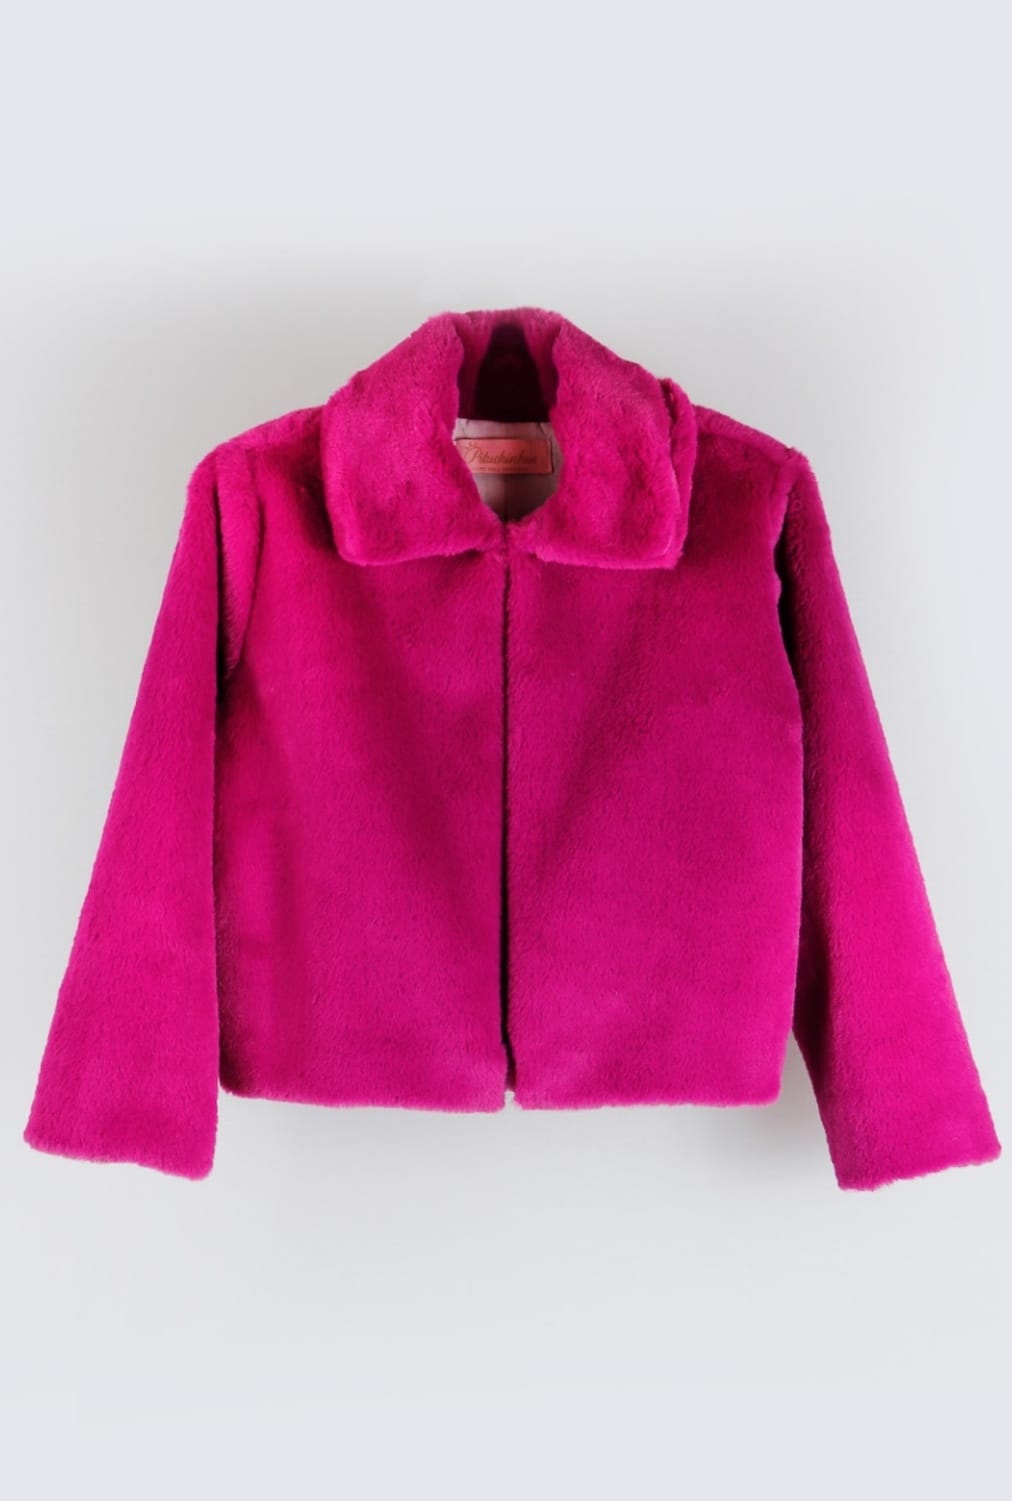 casaco pink pituchinhus